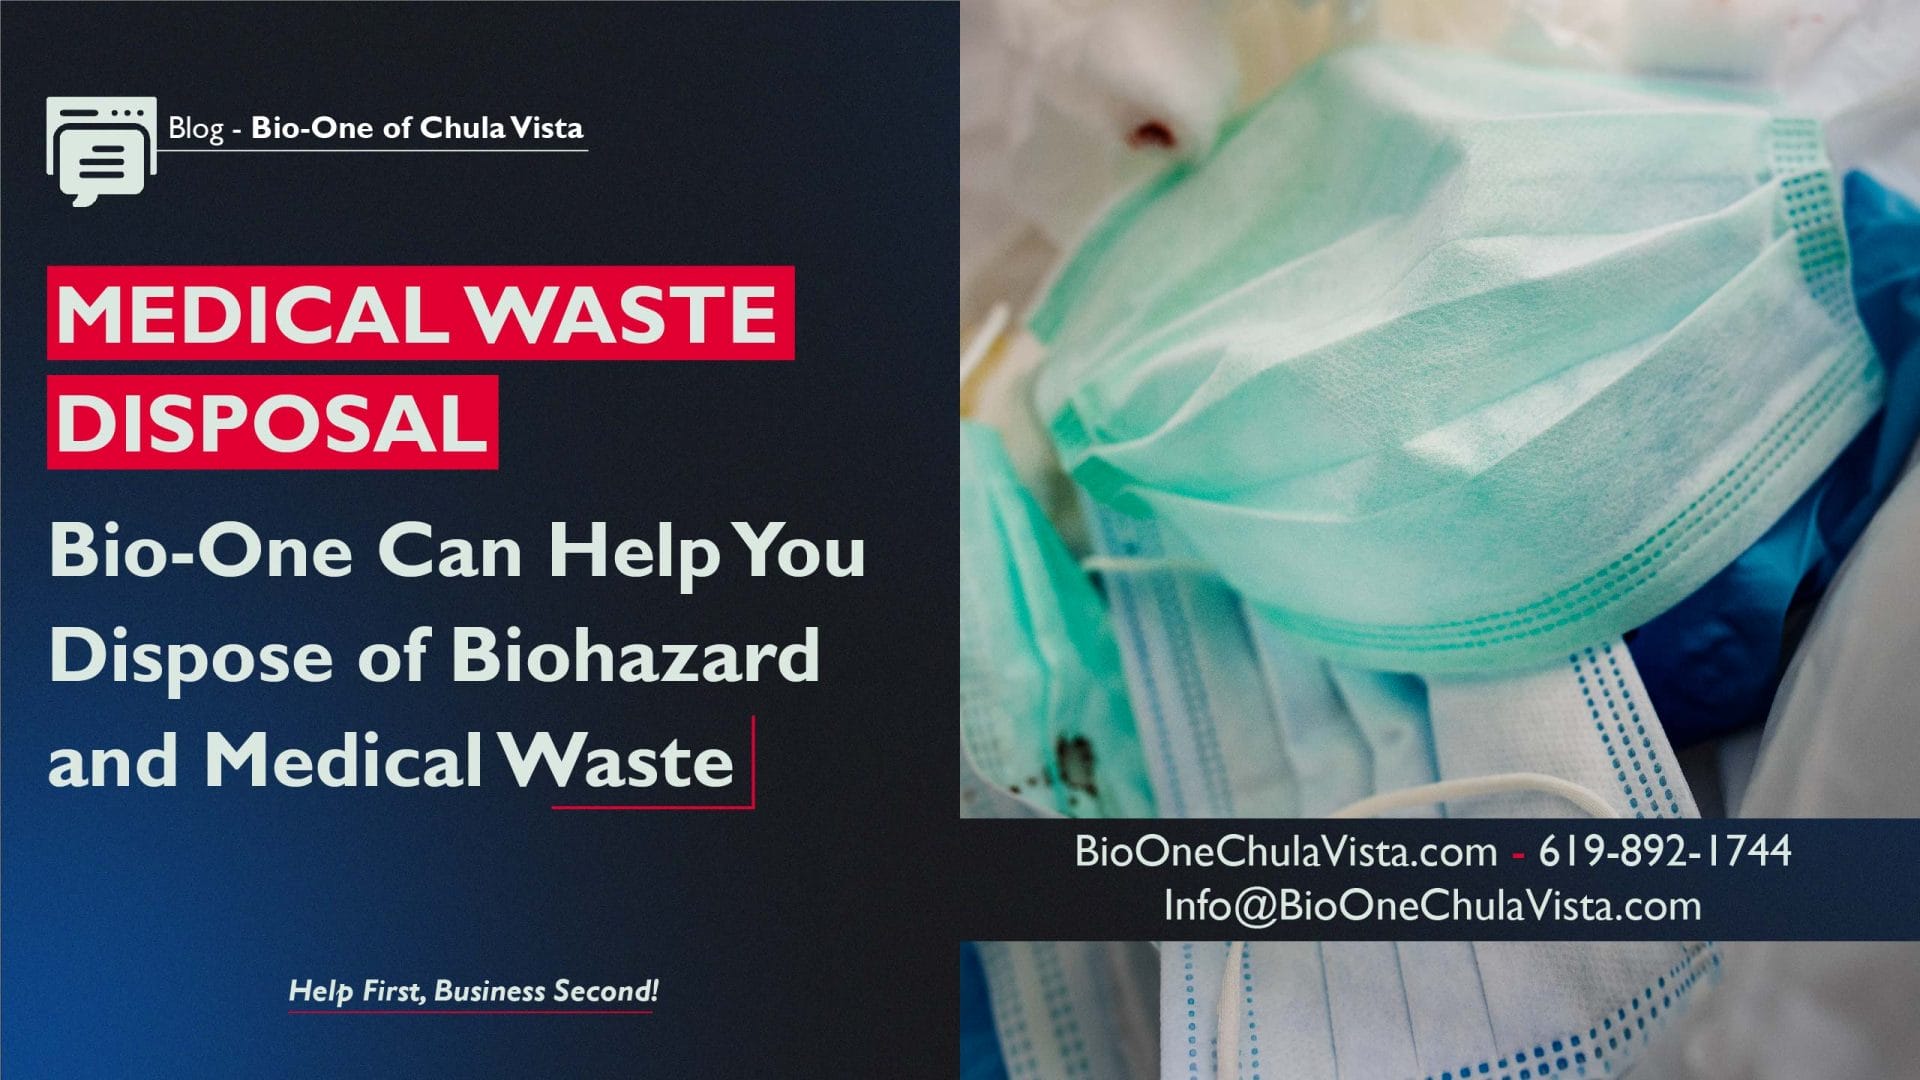 Bio-One Can Help You Dispose of Biohazard and Medical Waste. Photo credit: @rawpixel.com - Freepik / Bio-One of Chula Vista.